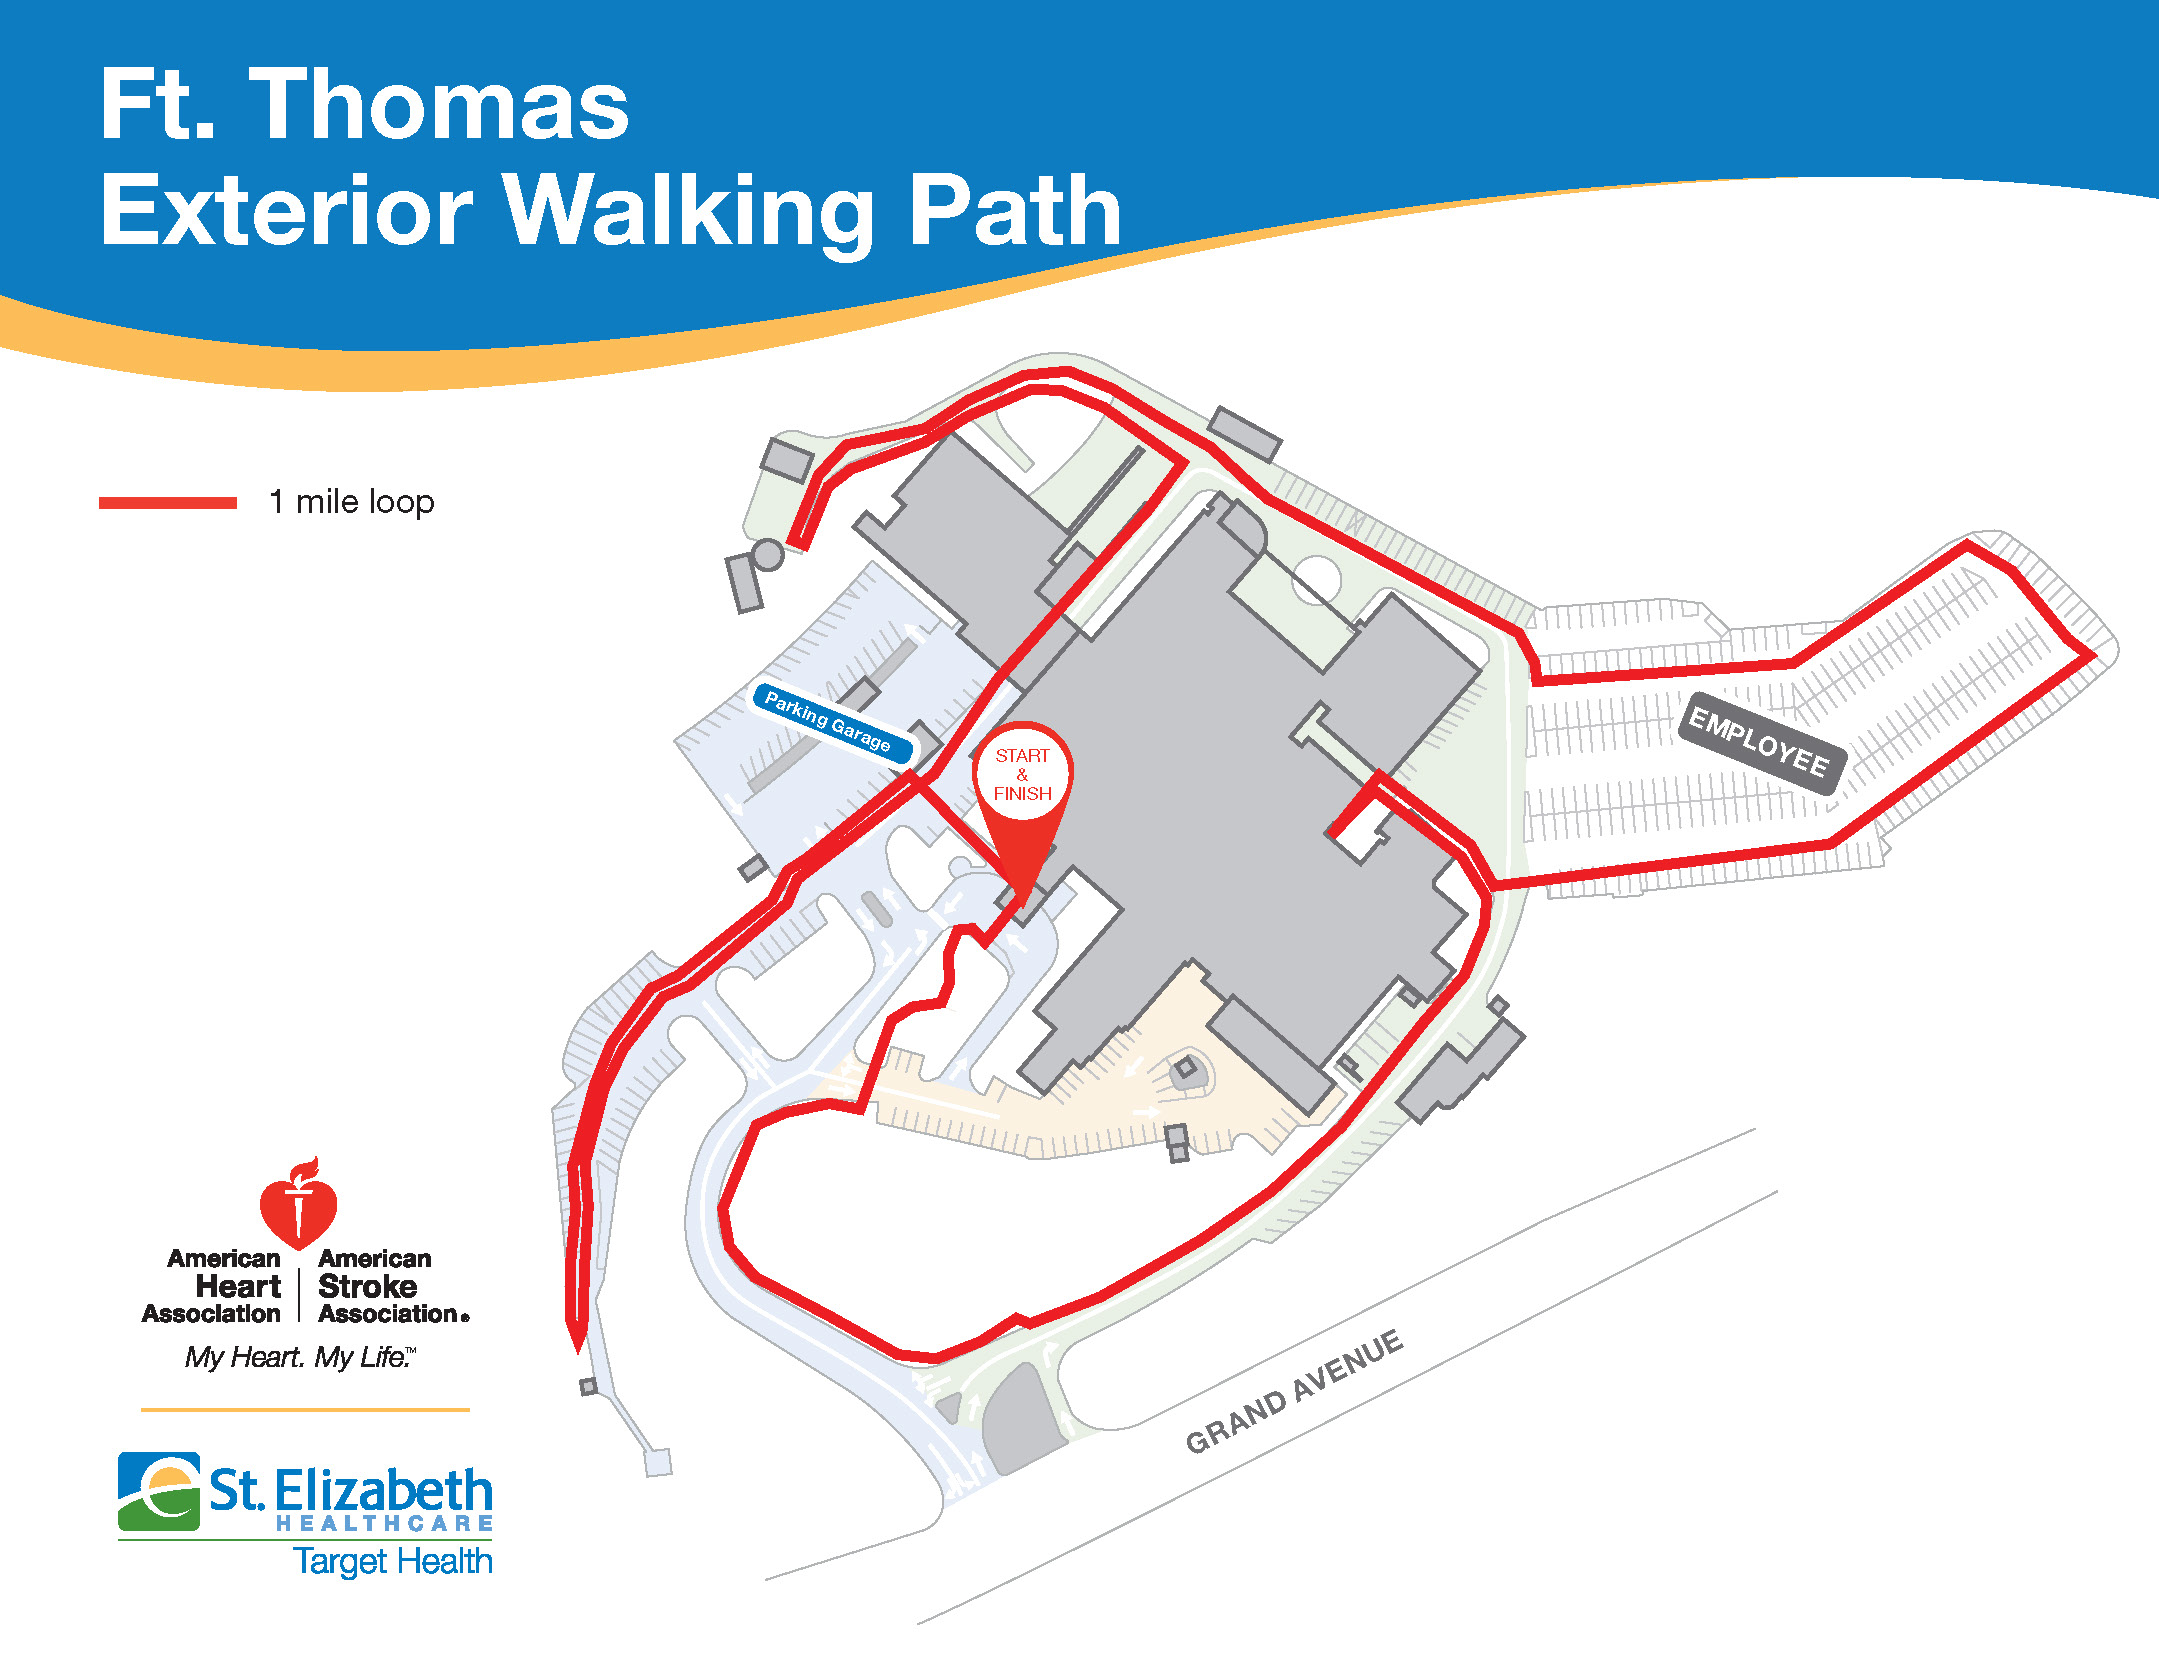 Ft. Thomas Exterior Walking Paths